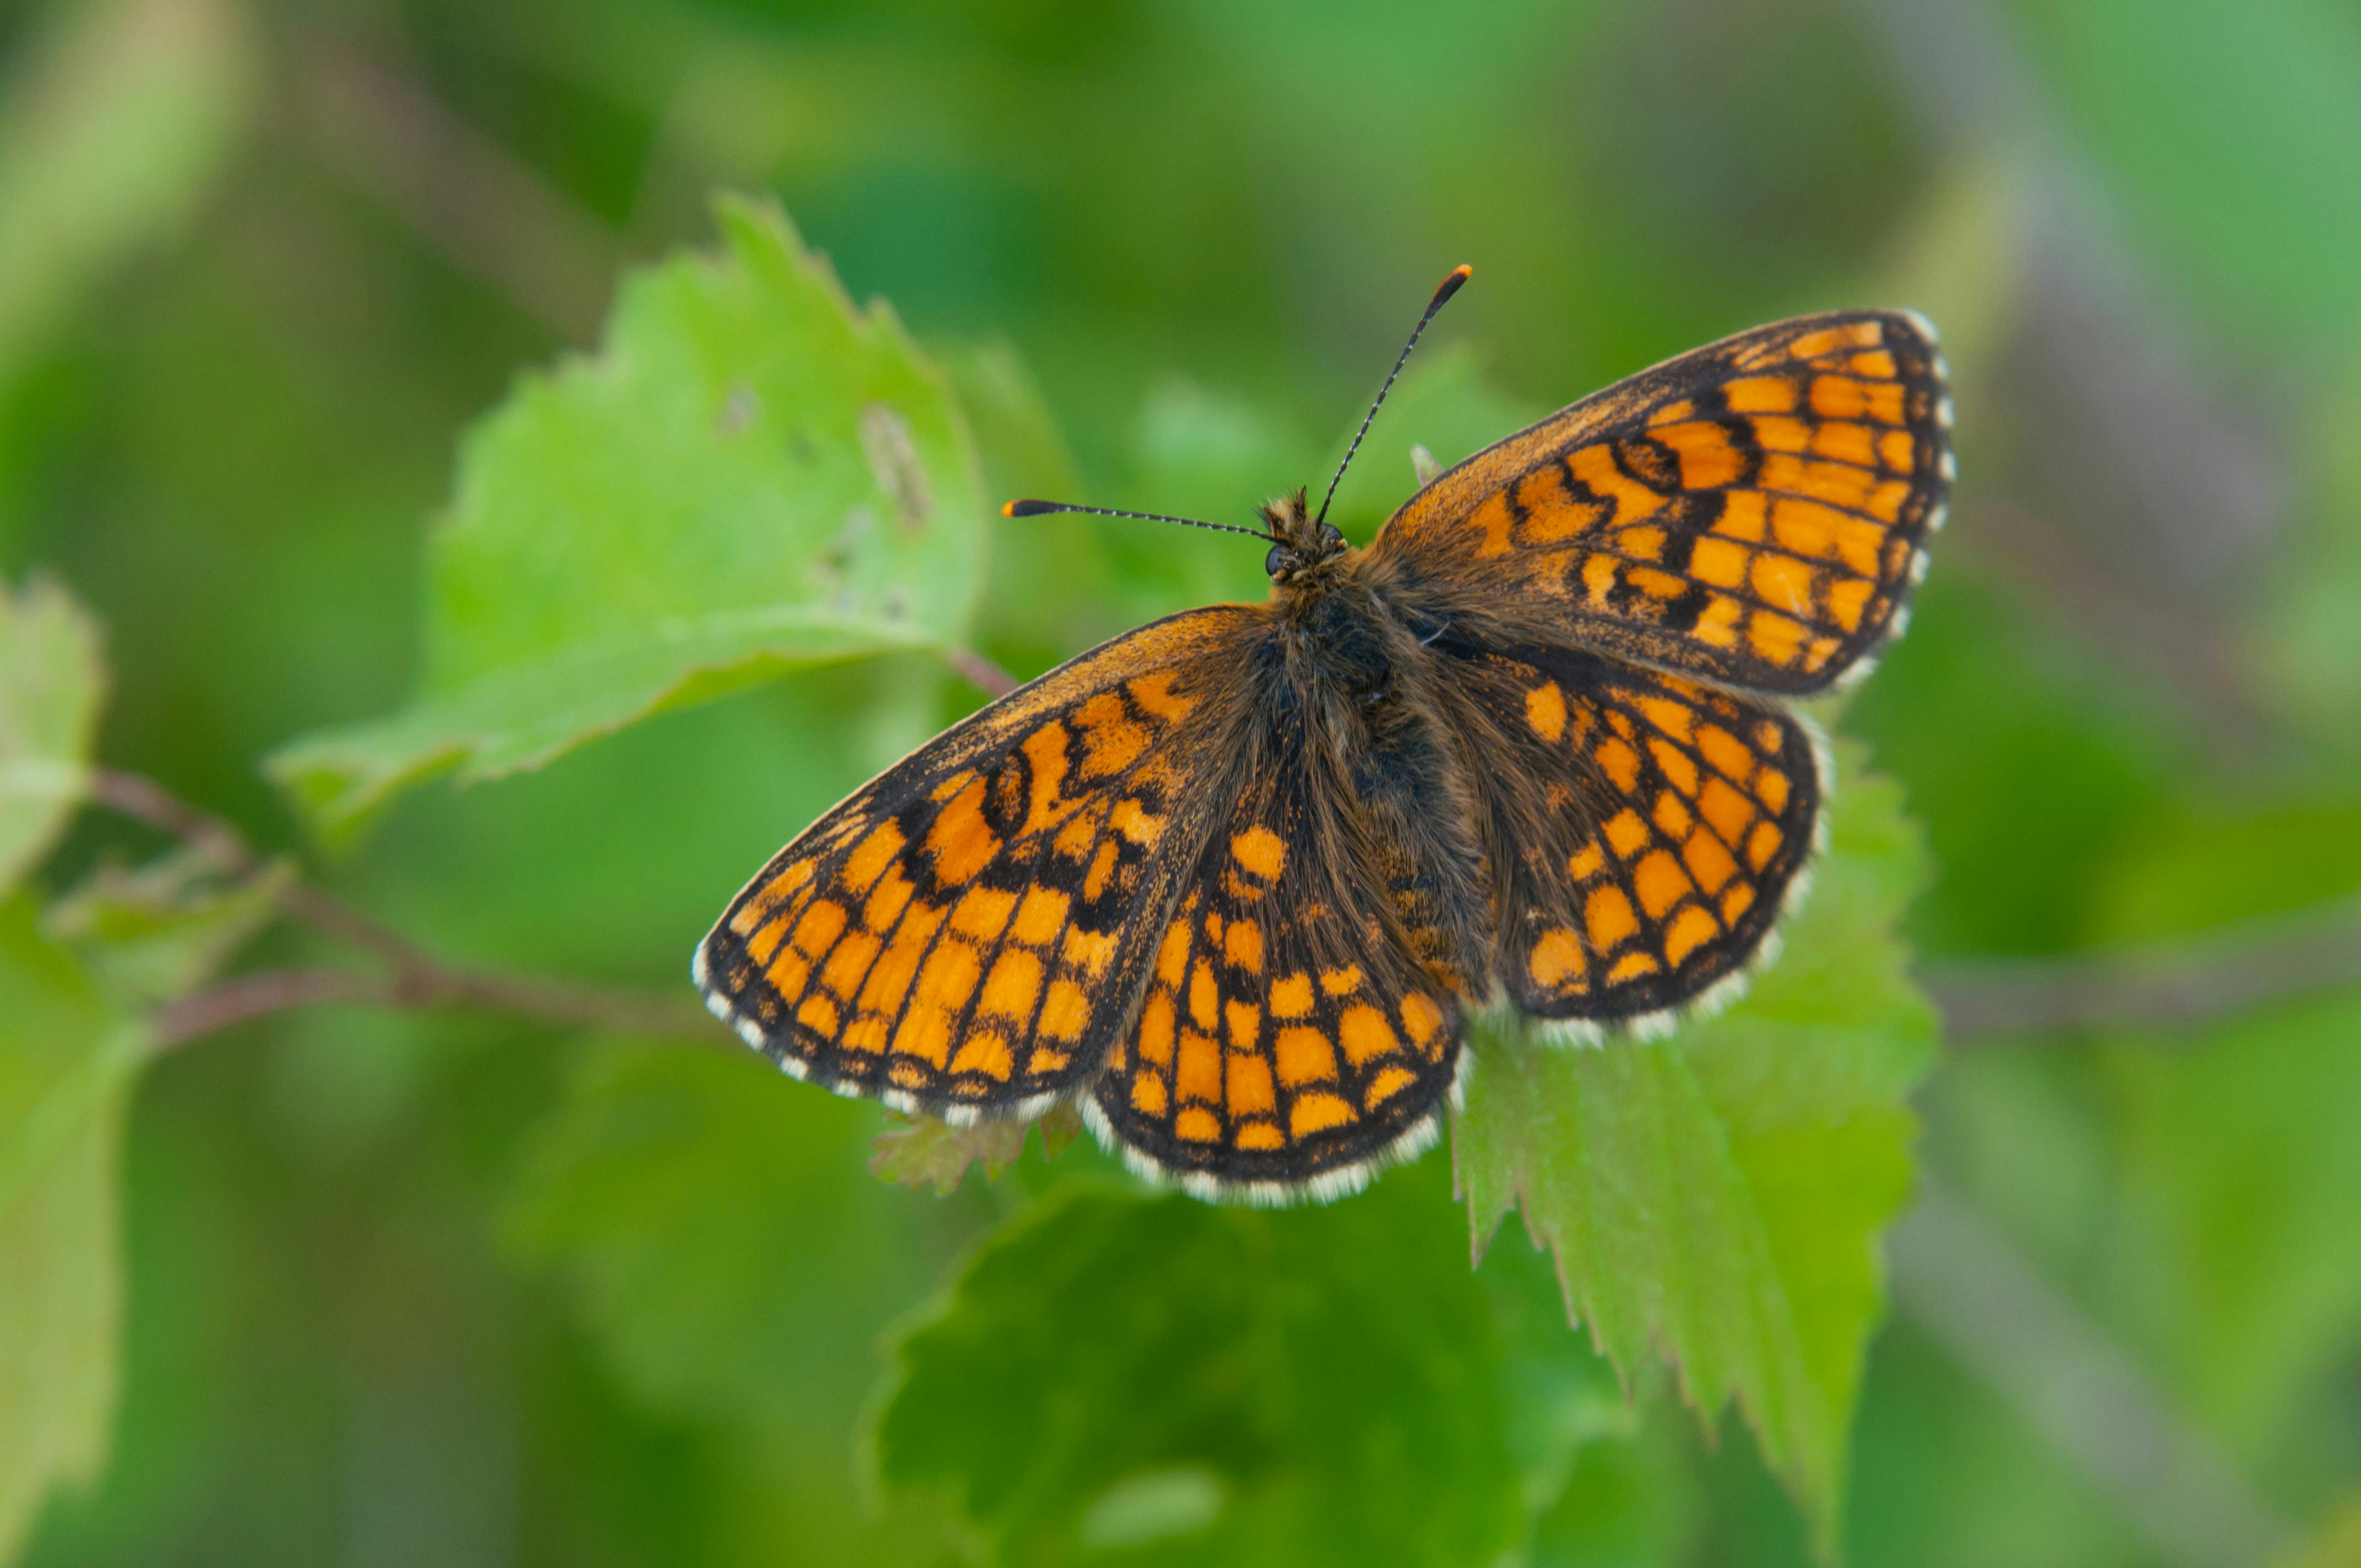 Den Brune Pletvinge er en af de sommerfuglearter, der er sårbar og truet i den danske natur. Foto: Tero Laakso CCBY